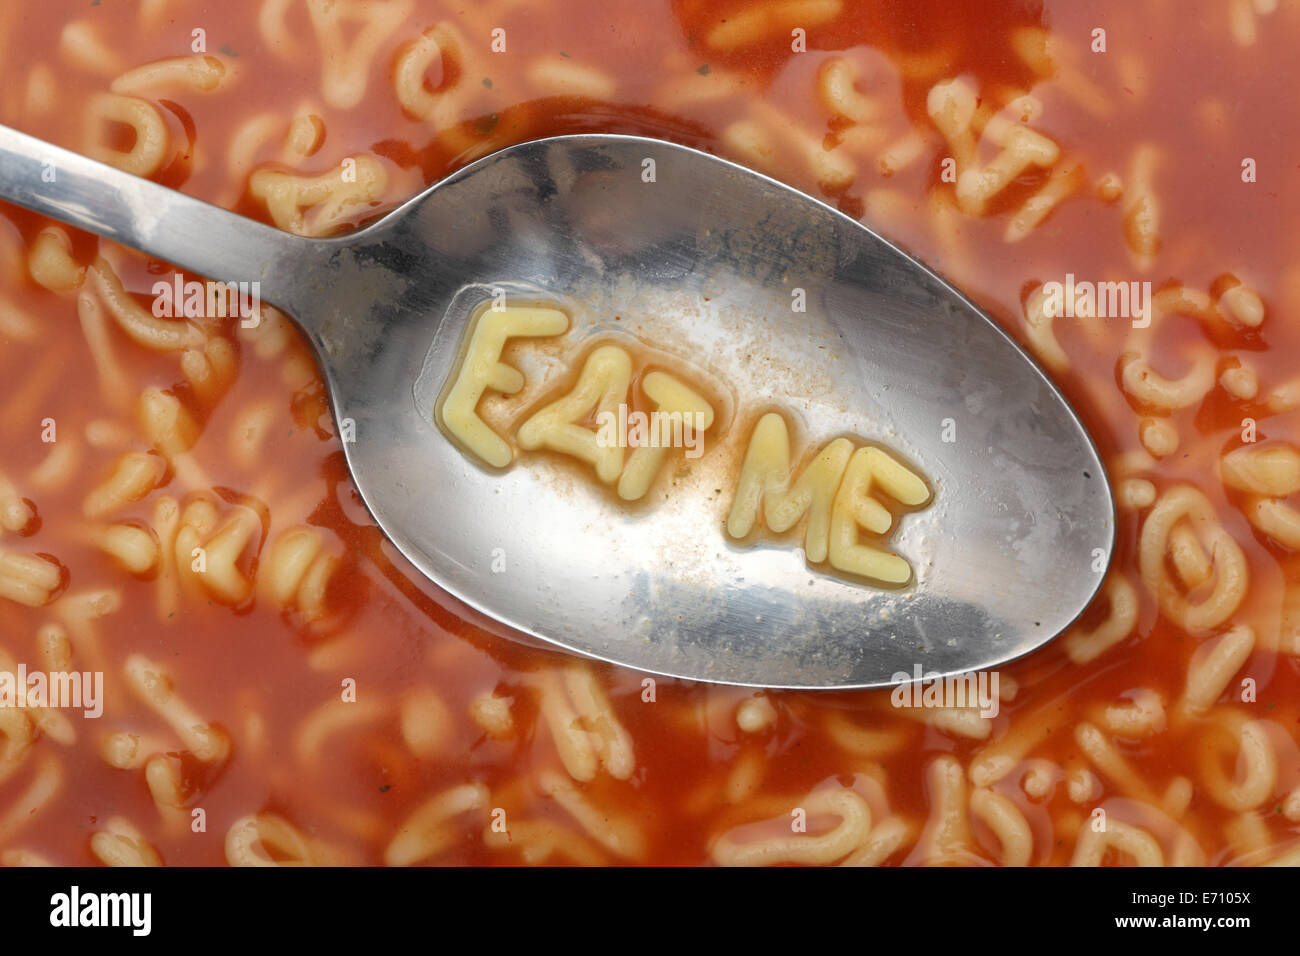 Alphabet Buchstaben in Löffel buchstabieren "Eat me". Alphabet Soup Nudeln.  Closeup Stockfotografie - Alamy